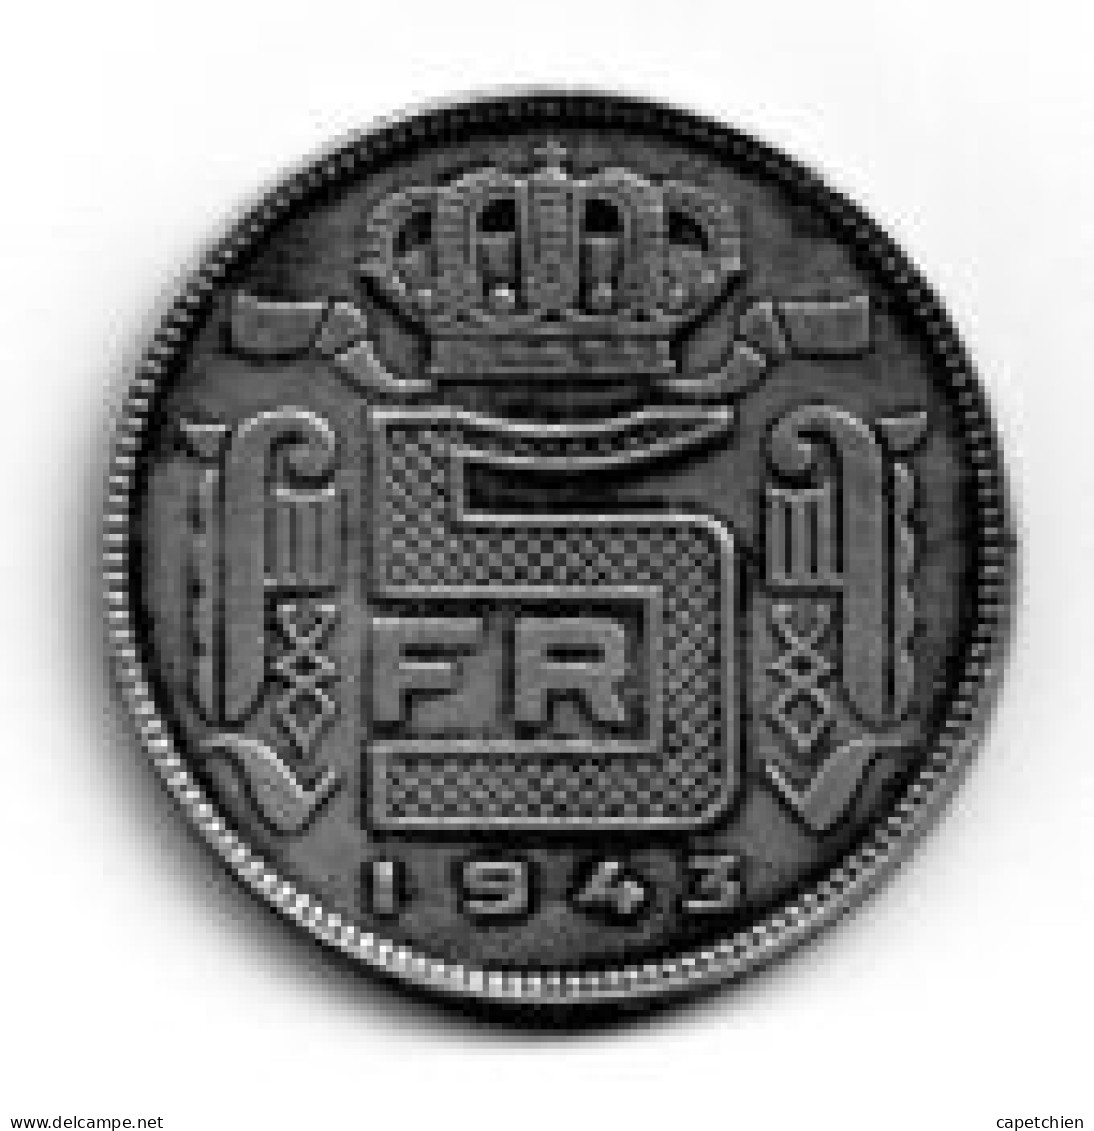 BELGIQUE / LEOPOLD III ROI DES BELGES / 5 FRANCS  / 1943 / ZINC / 5.96 G / 25 Mm - 5 Francs